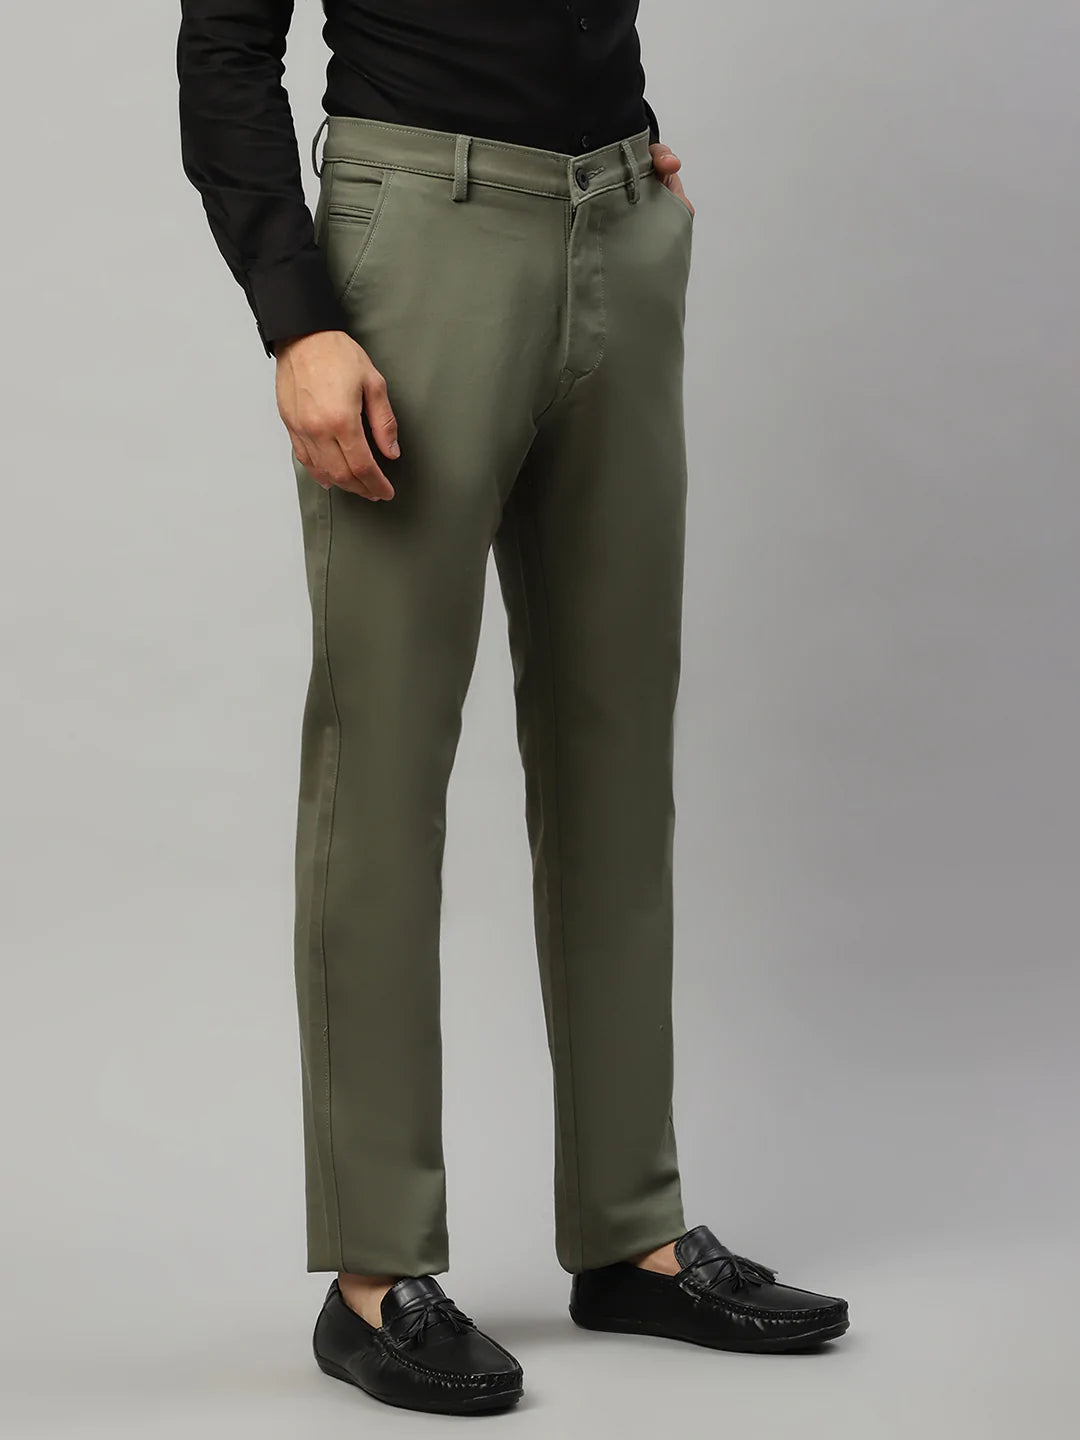 Men Dark Green Trousers - Buy Men Dark Green Trousers online in India